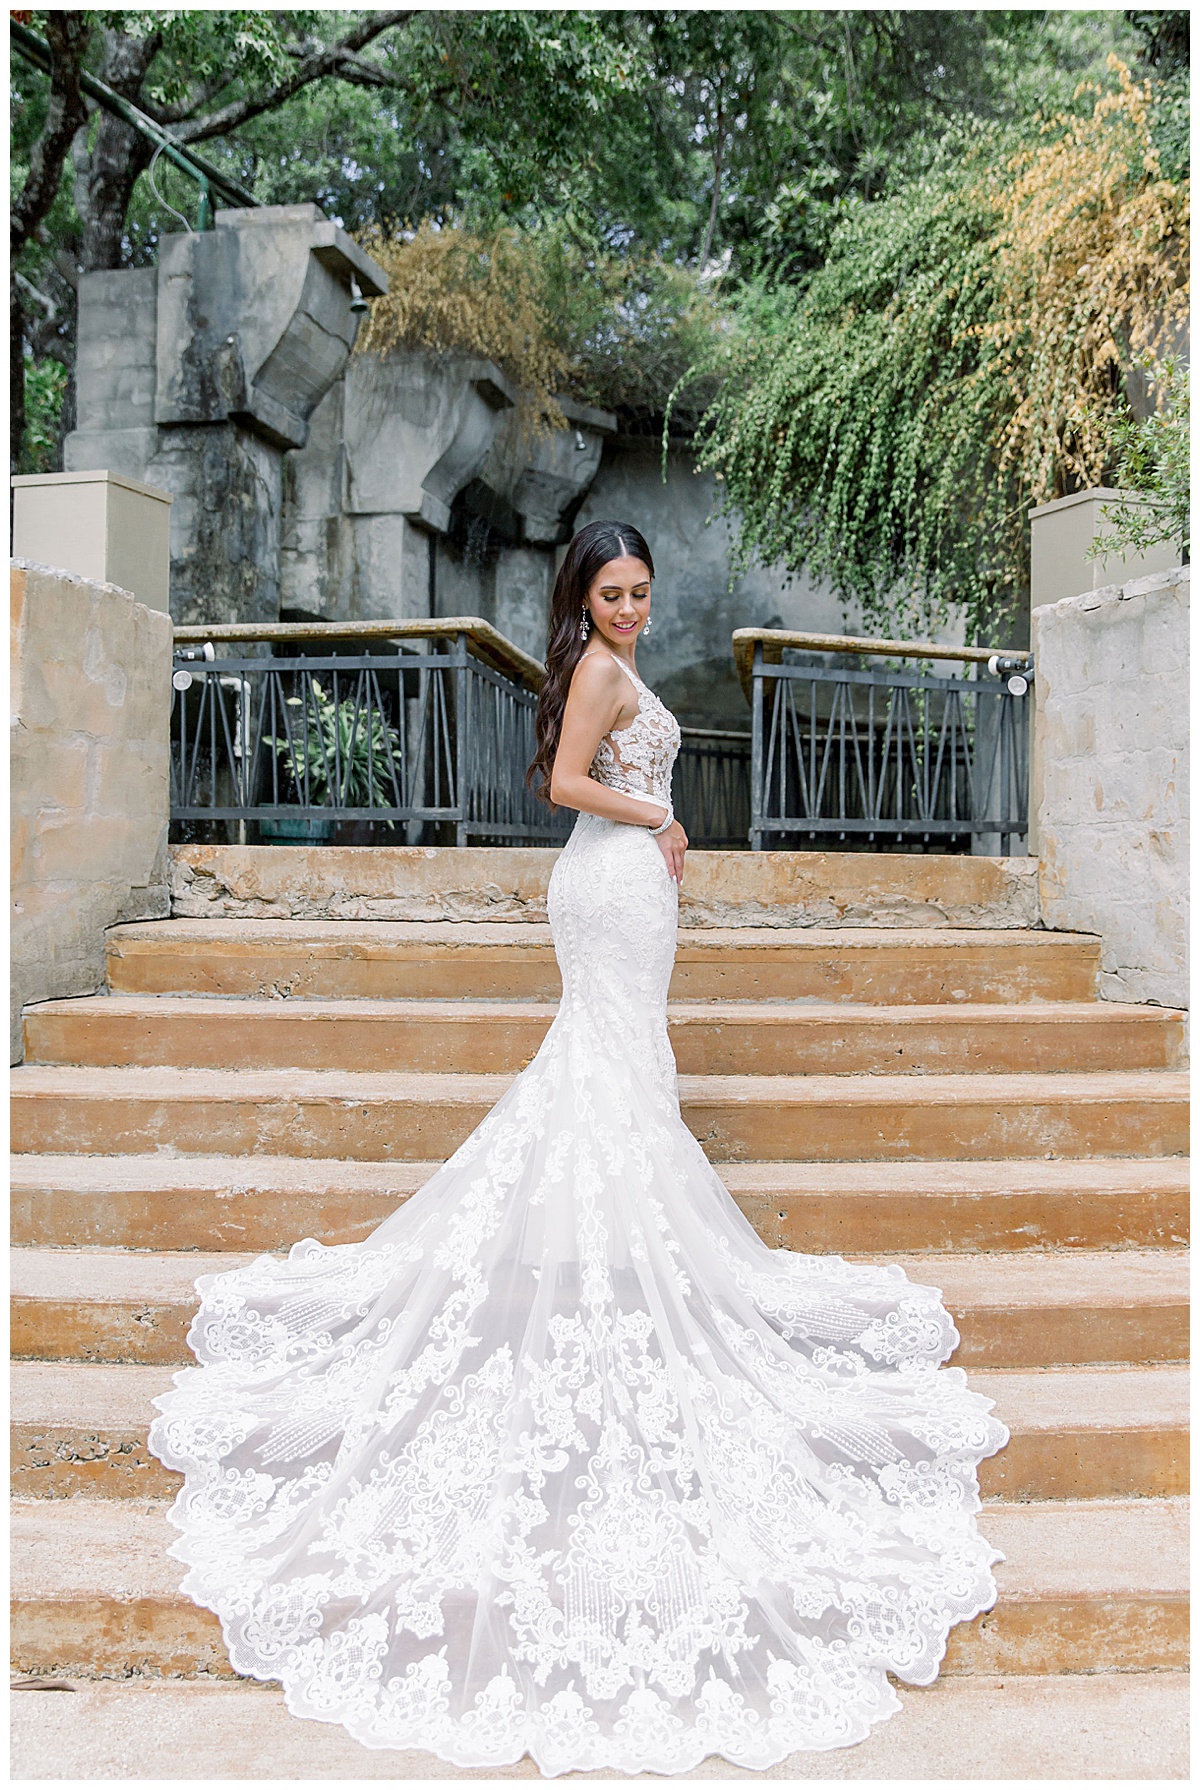 Bride looks over shoulder while standing on steps| wedding dress train down steps| villa wedding| Villa Antonia| Austin, TX wedding venue| Austin, TX wedding photographer| www.monicaroberts.com